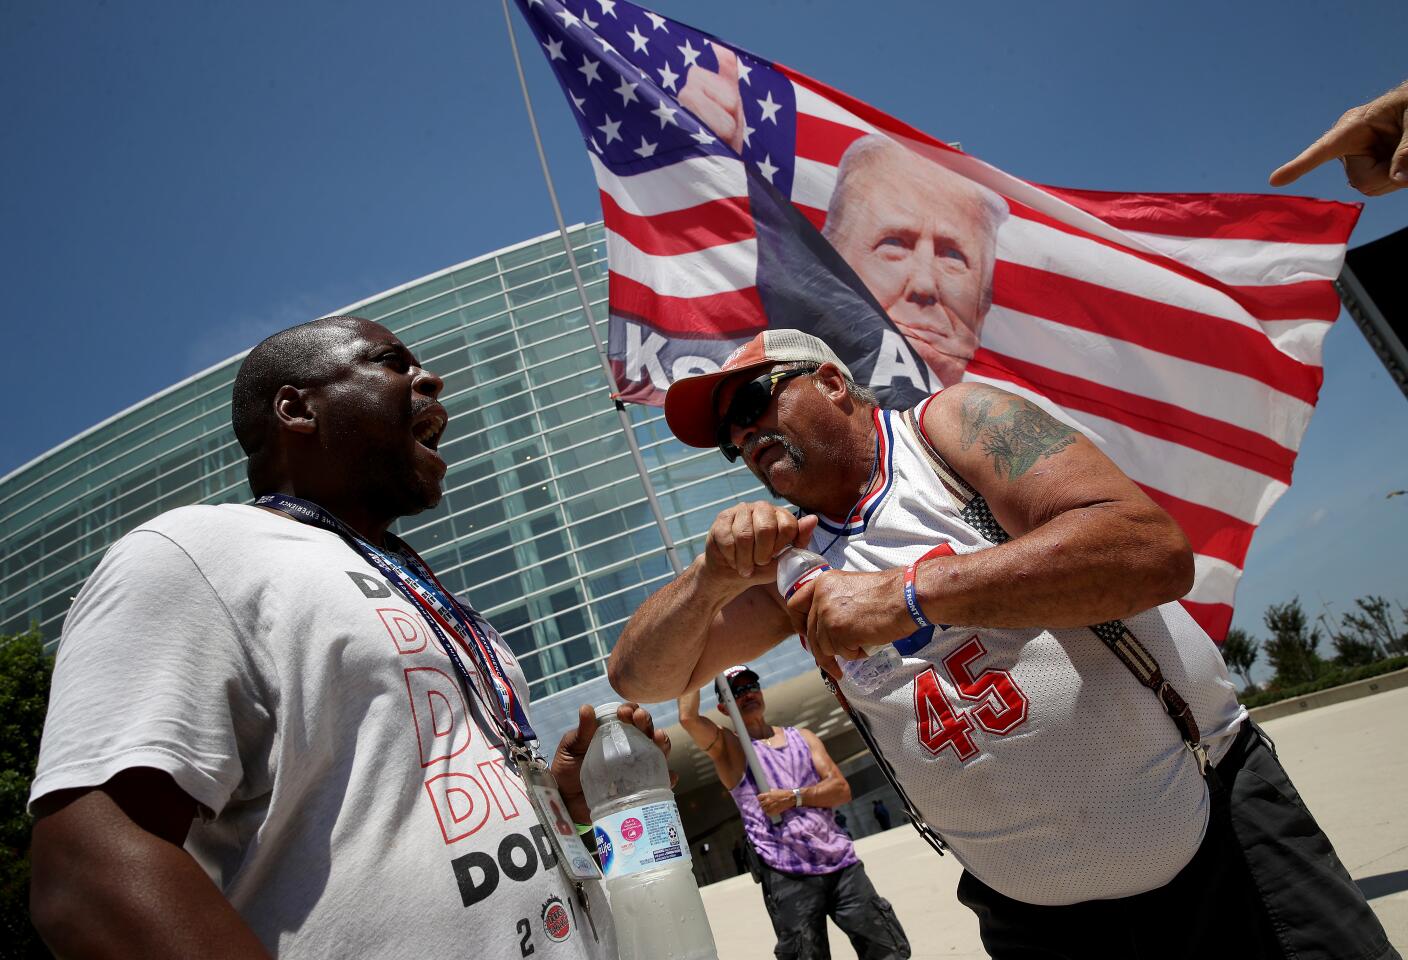 Nicholas Winford, left, debates Trump supporter Randall Thom outside the BOK Center in Tulsa on June 18.